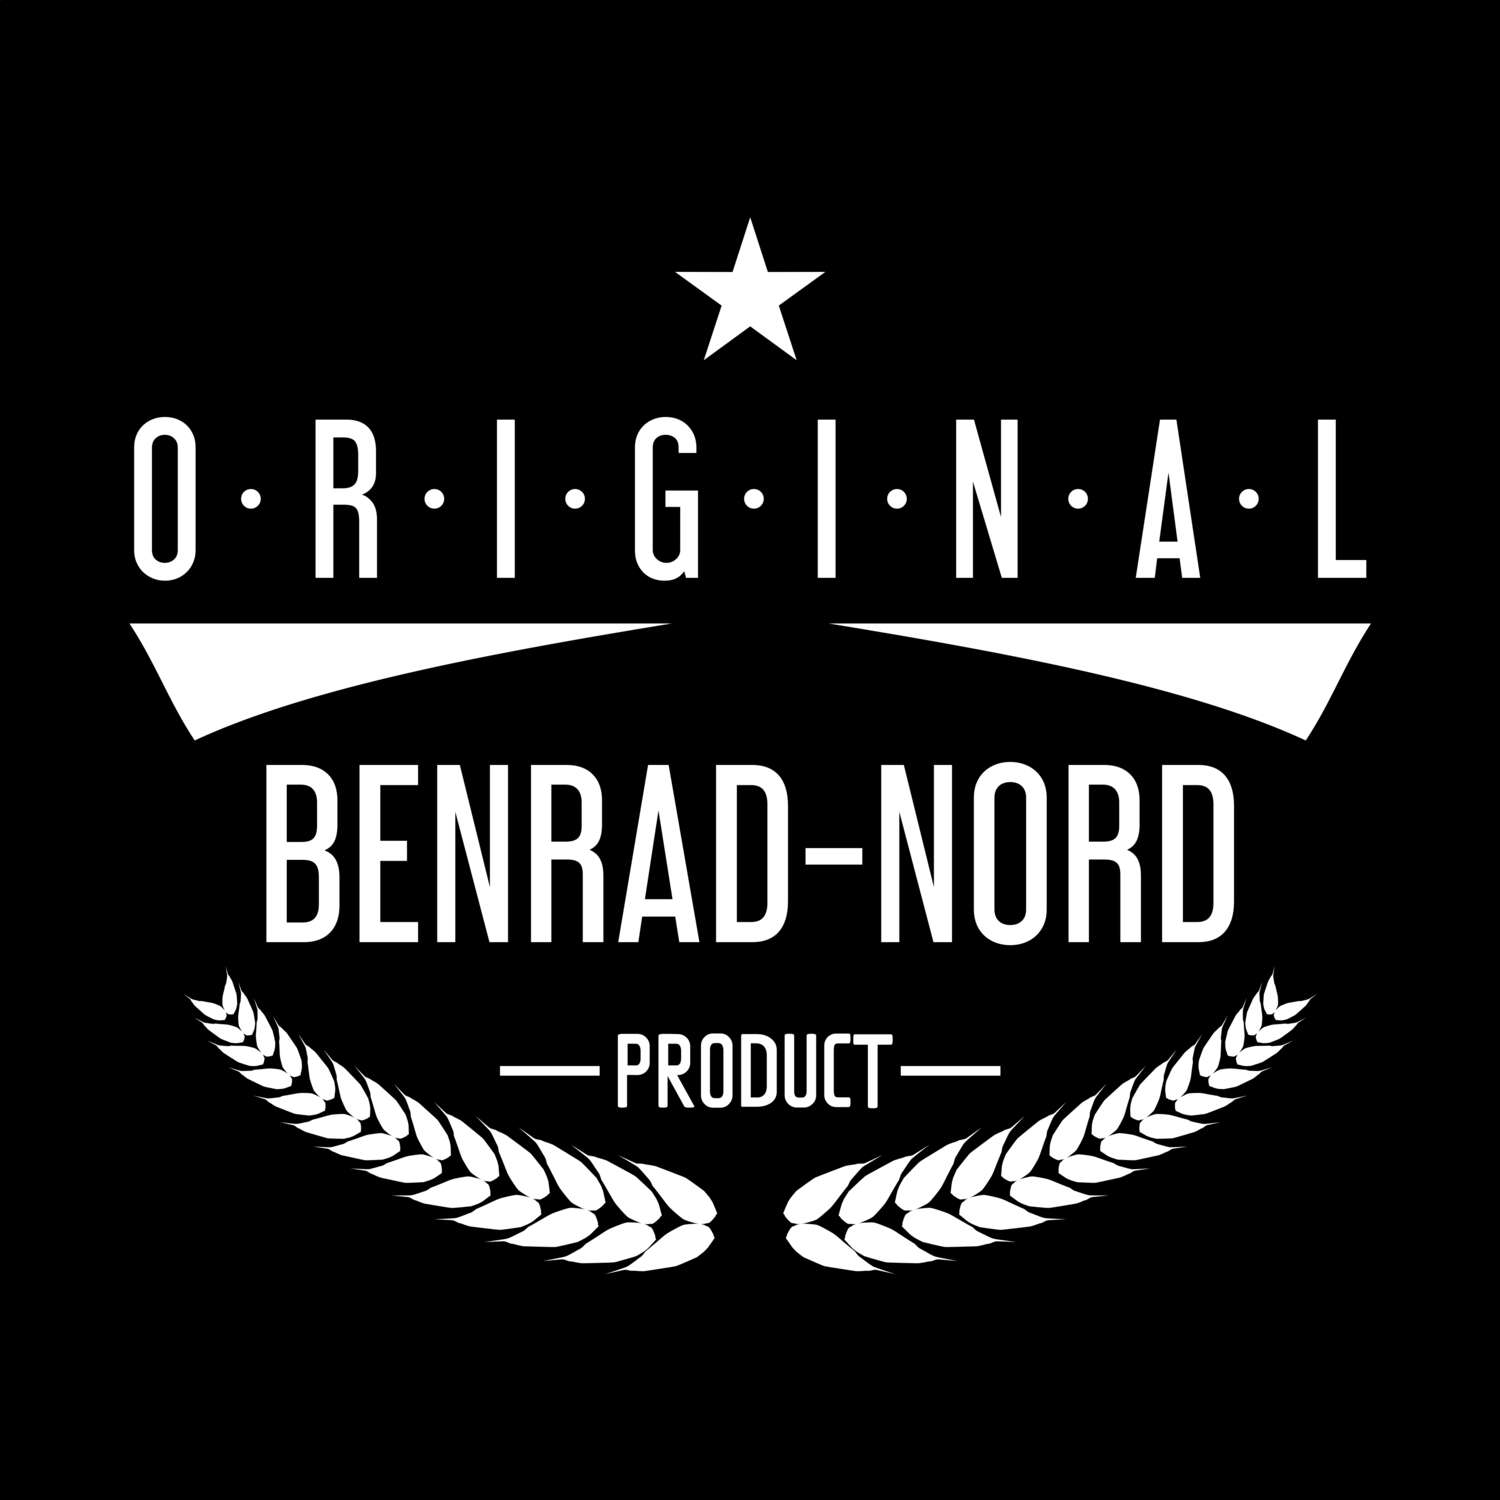 Benrad-Nord T-Shirt »Original Product«